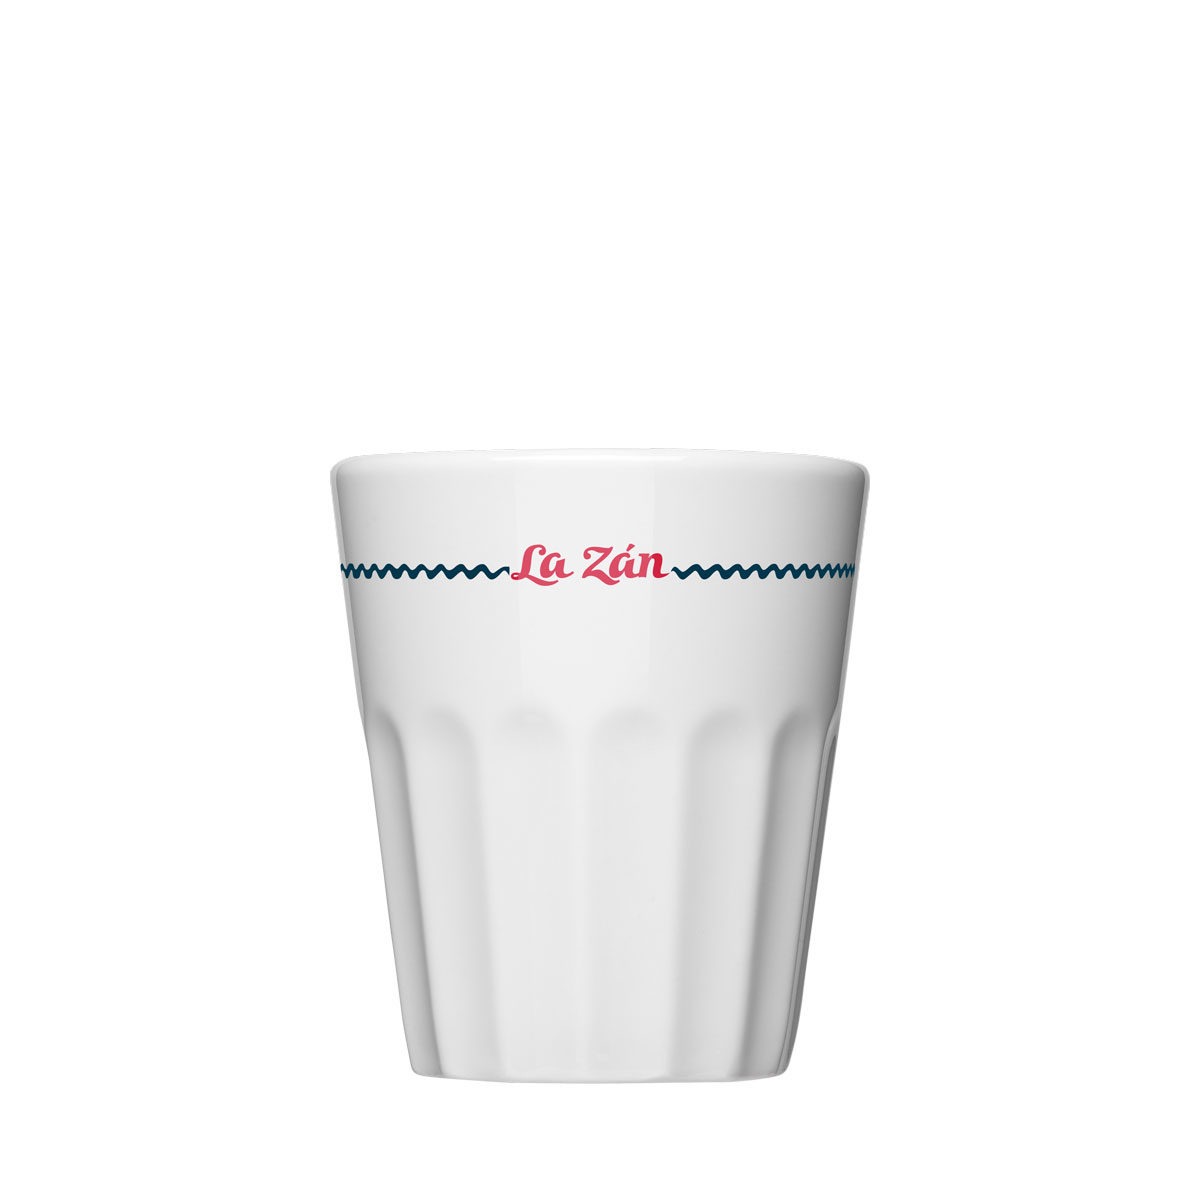 https://www.barista-pro.com/wp-content/uploads/2020/10/Form-491-White-260-ml-Lungo-mug-without-handle-3.jpg